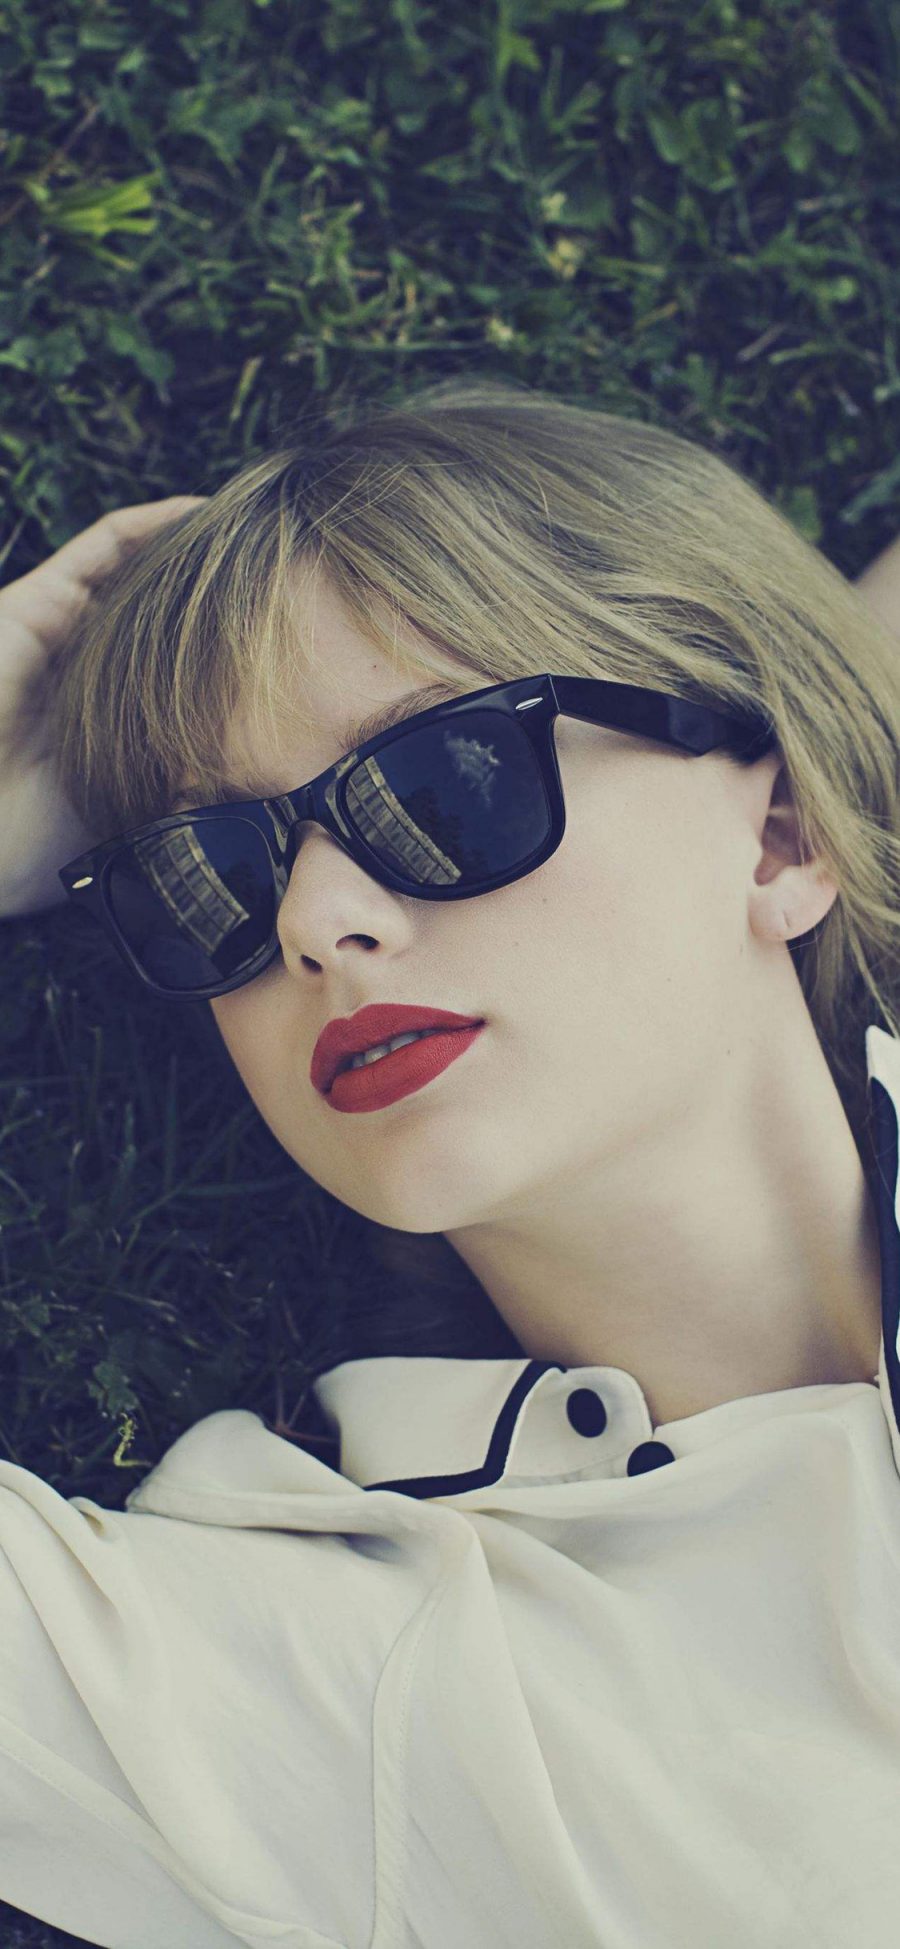 [2436×1125]Taylor Swift 歌手 音乐人 明星 艺人 草坪欧美 苹果手机美女壁纸图片